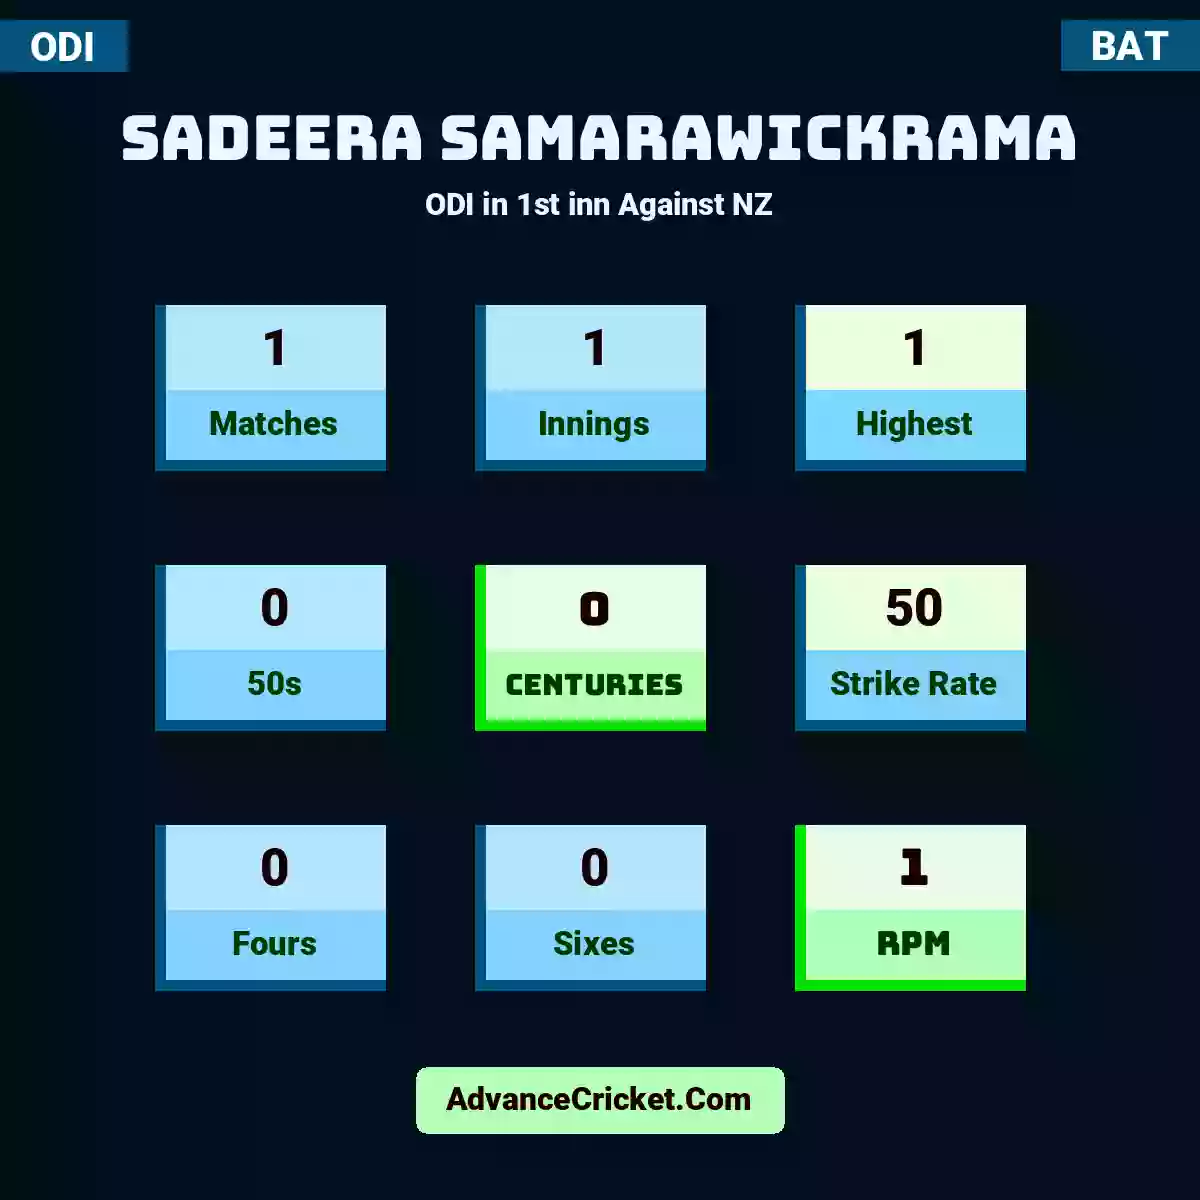 Sadeera Samarawickrama ODI  in 1st inn Against NZ, Sadeera Samarawickrama played 1 matches, scored 1 runs as highest, 0 half-centuries, and 0 centuries, with a strike rate of 50. S.Samarawickrama hit 0 fours and 0 sixes, with an RPM of 1.